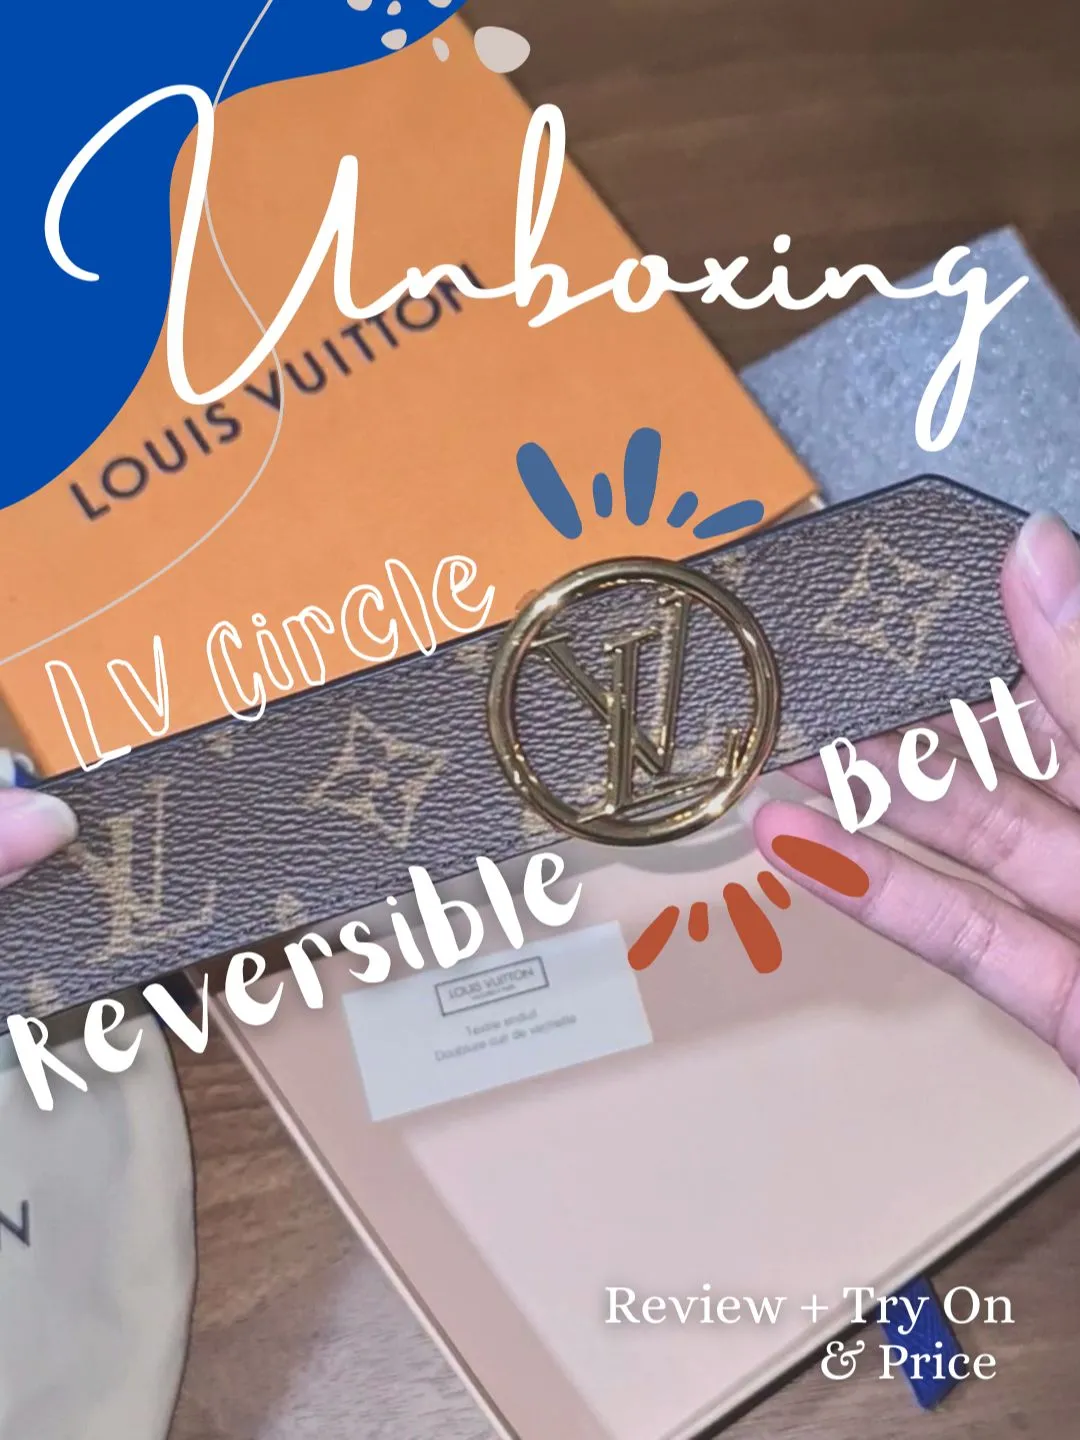 Louis Vuitton Reversible Belt Review + Outfit Inspiration - Dawn P